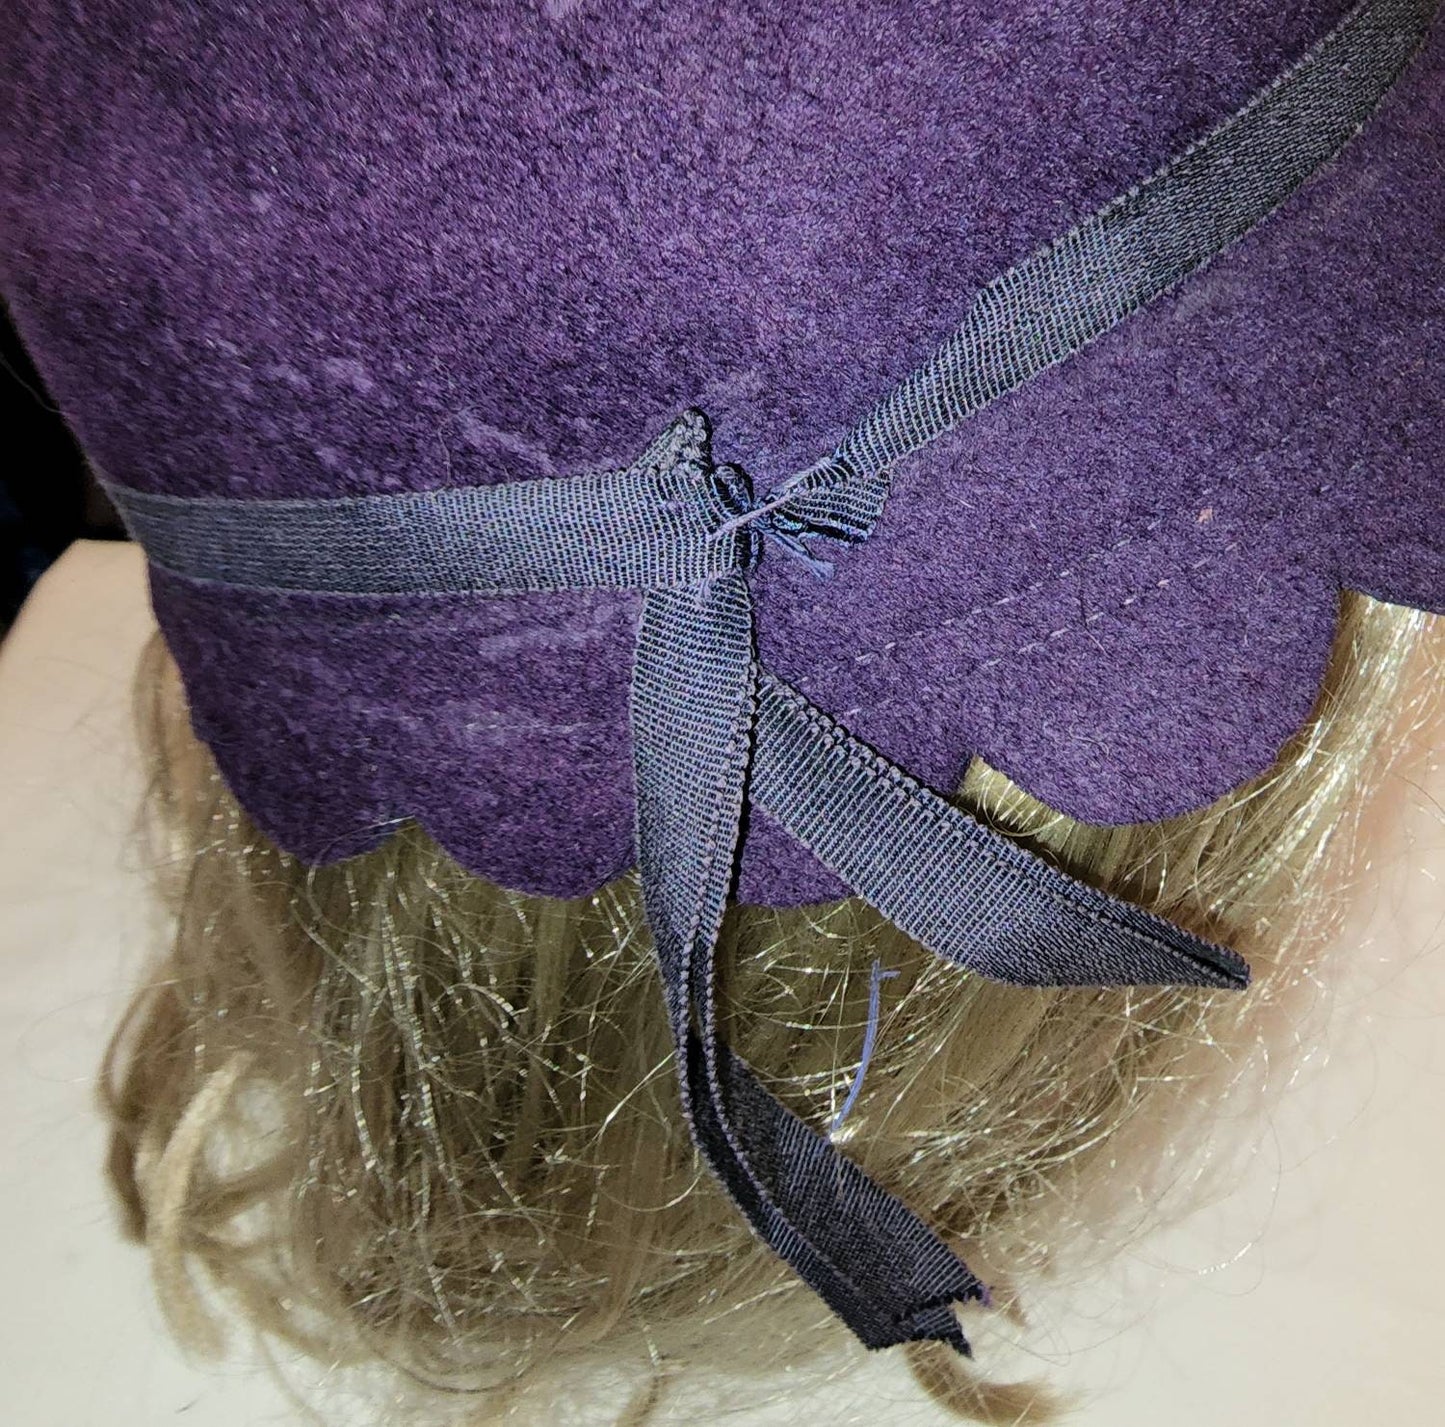 Vintage Felt Hat 1960s Round Purple Wool Felt Hat Scalloped Edges Black Ribbon Trim Merrimac Hat Corp. Rockabilly Mod 22 in.